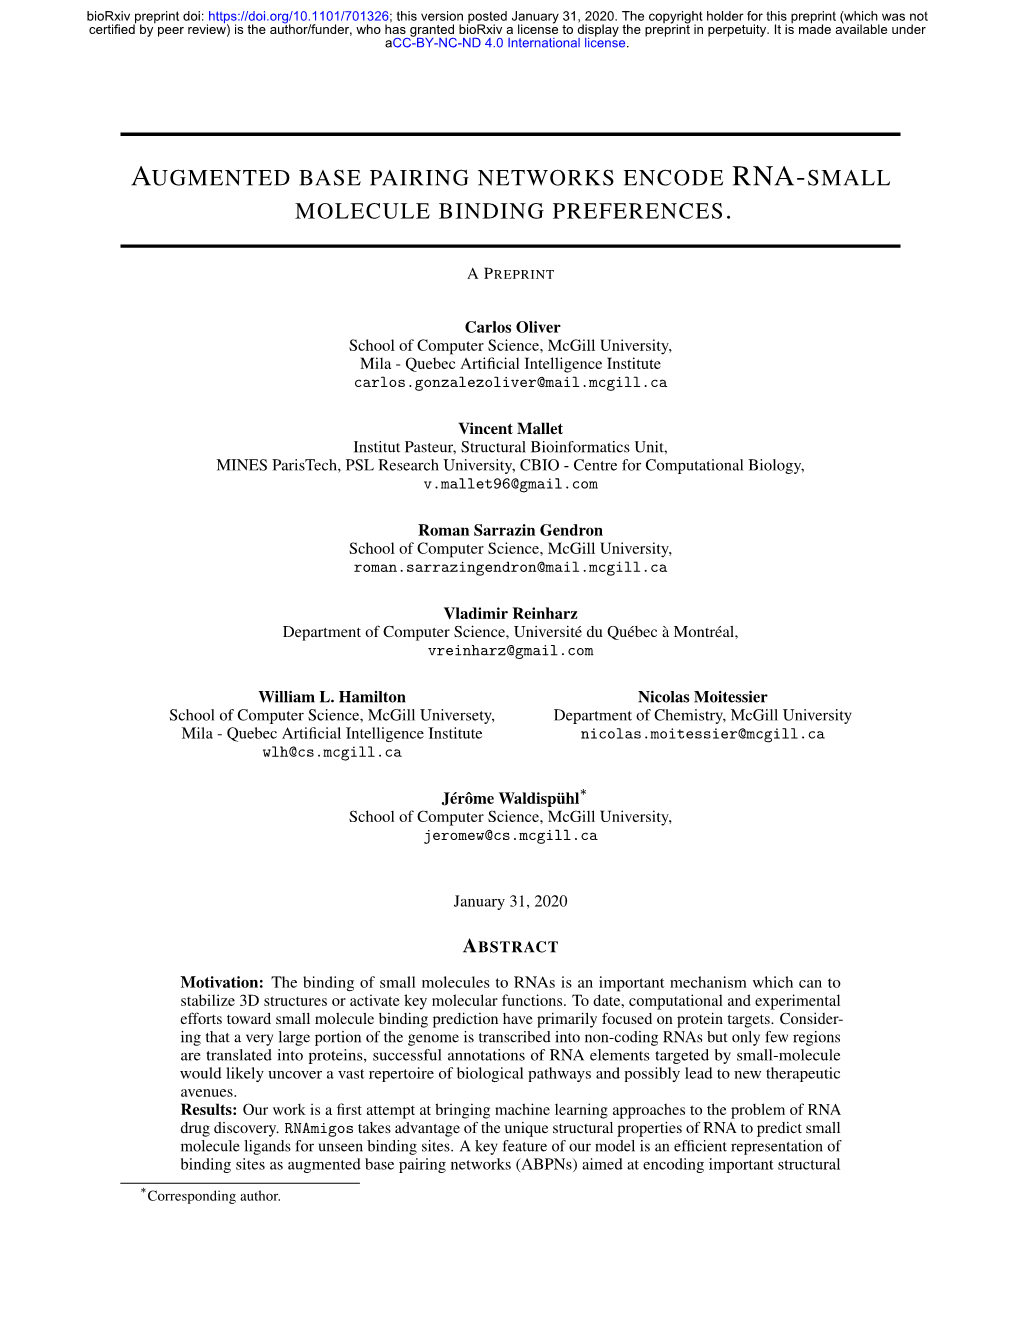 Augmented Base Pairing Networks Encode Rna-Small Molecule Binding Preferences